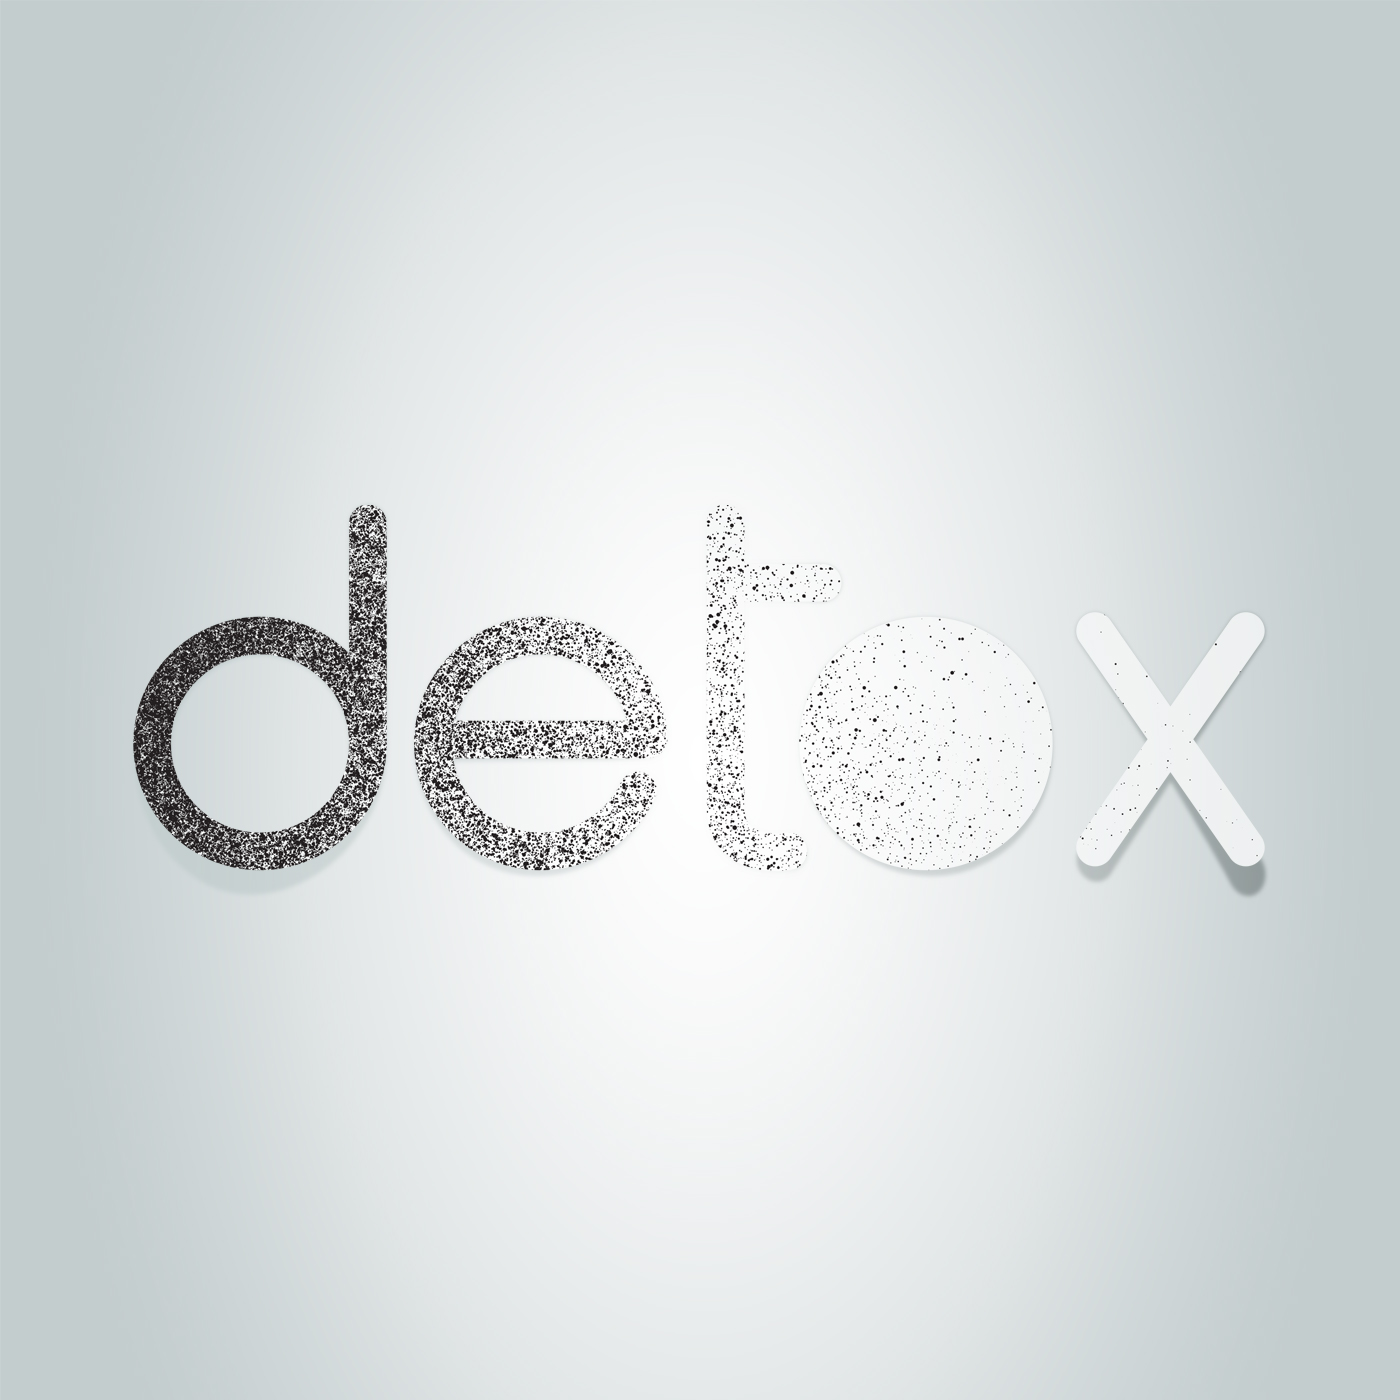 Detox | Part 3 | Lightening The Load